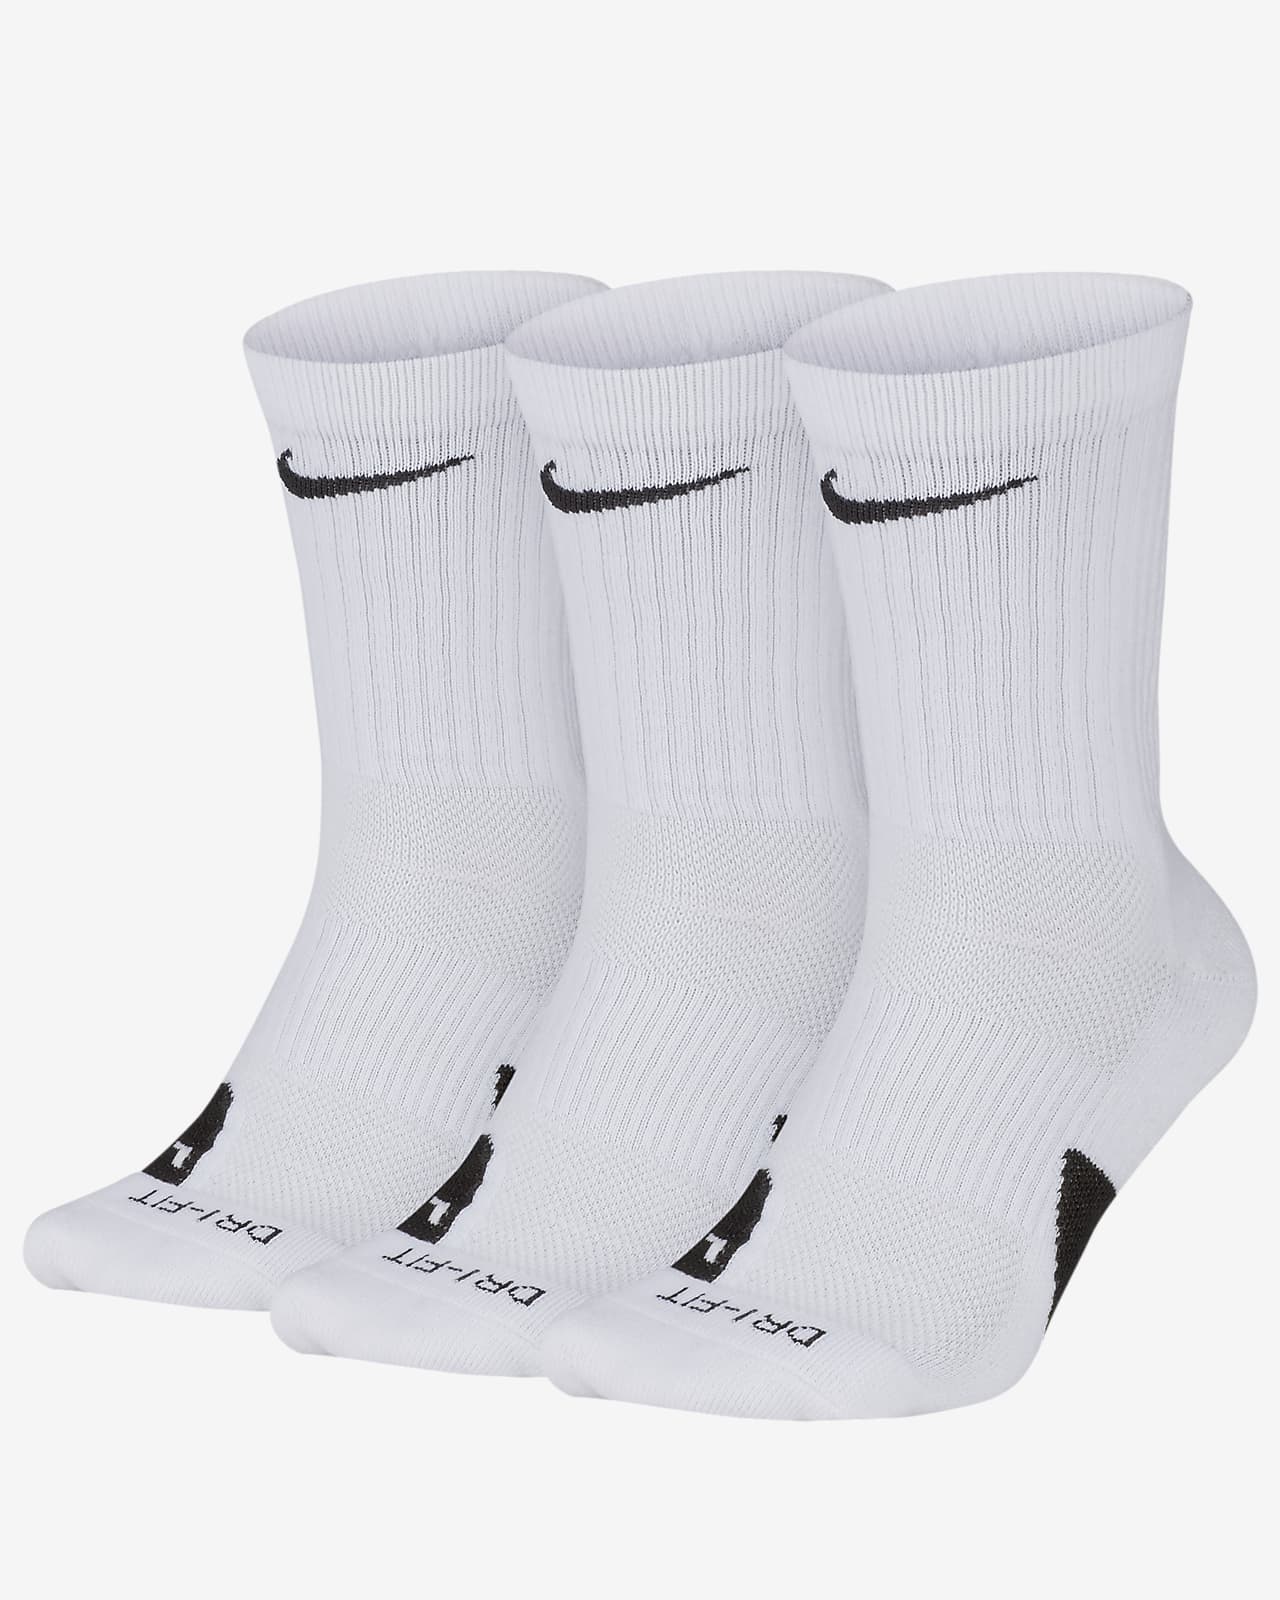 white and gold nike elite socks